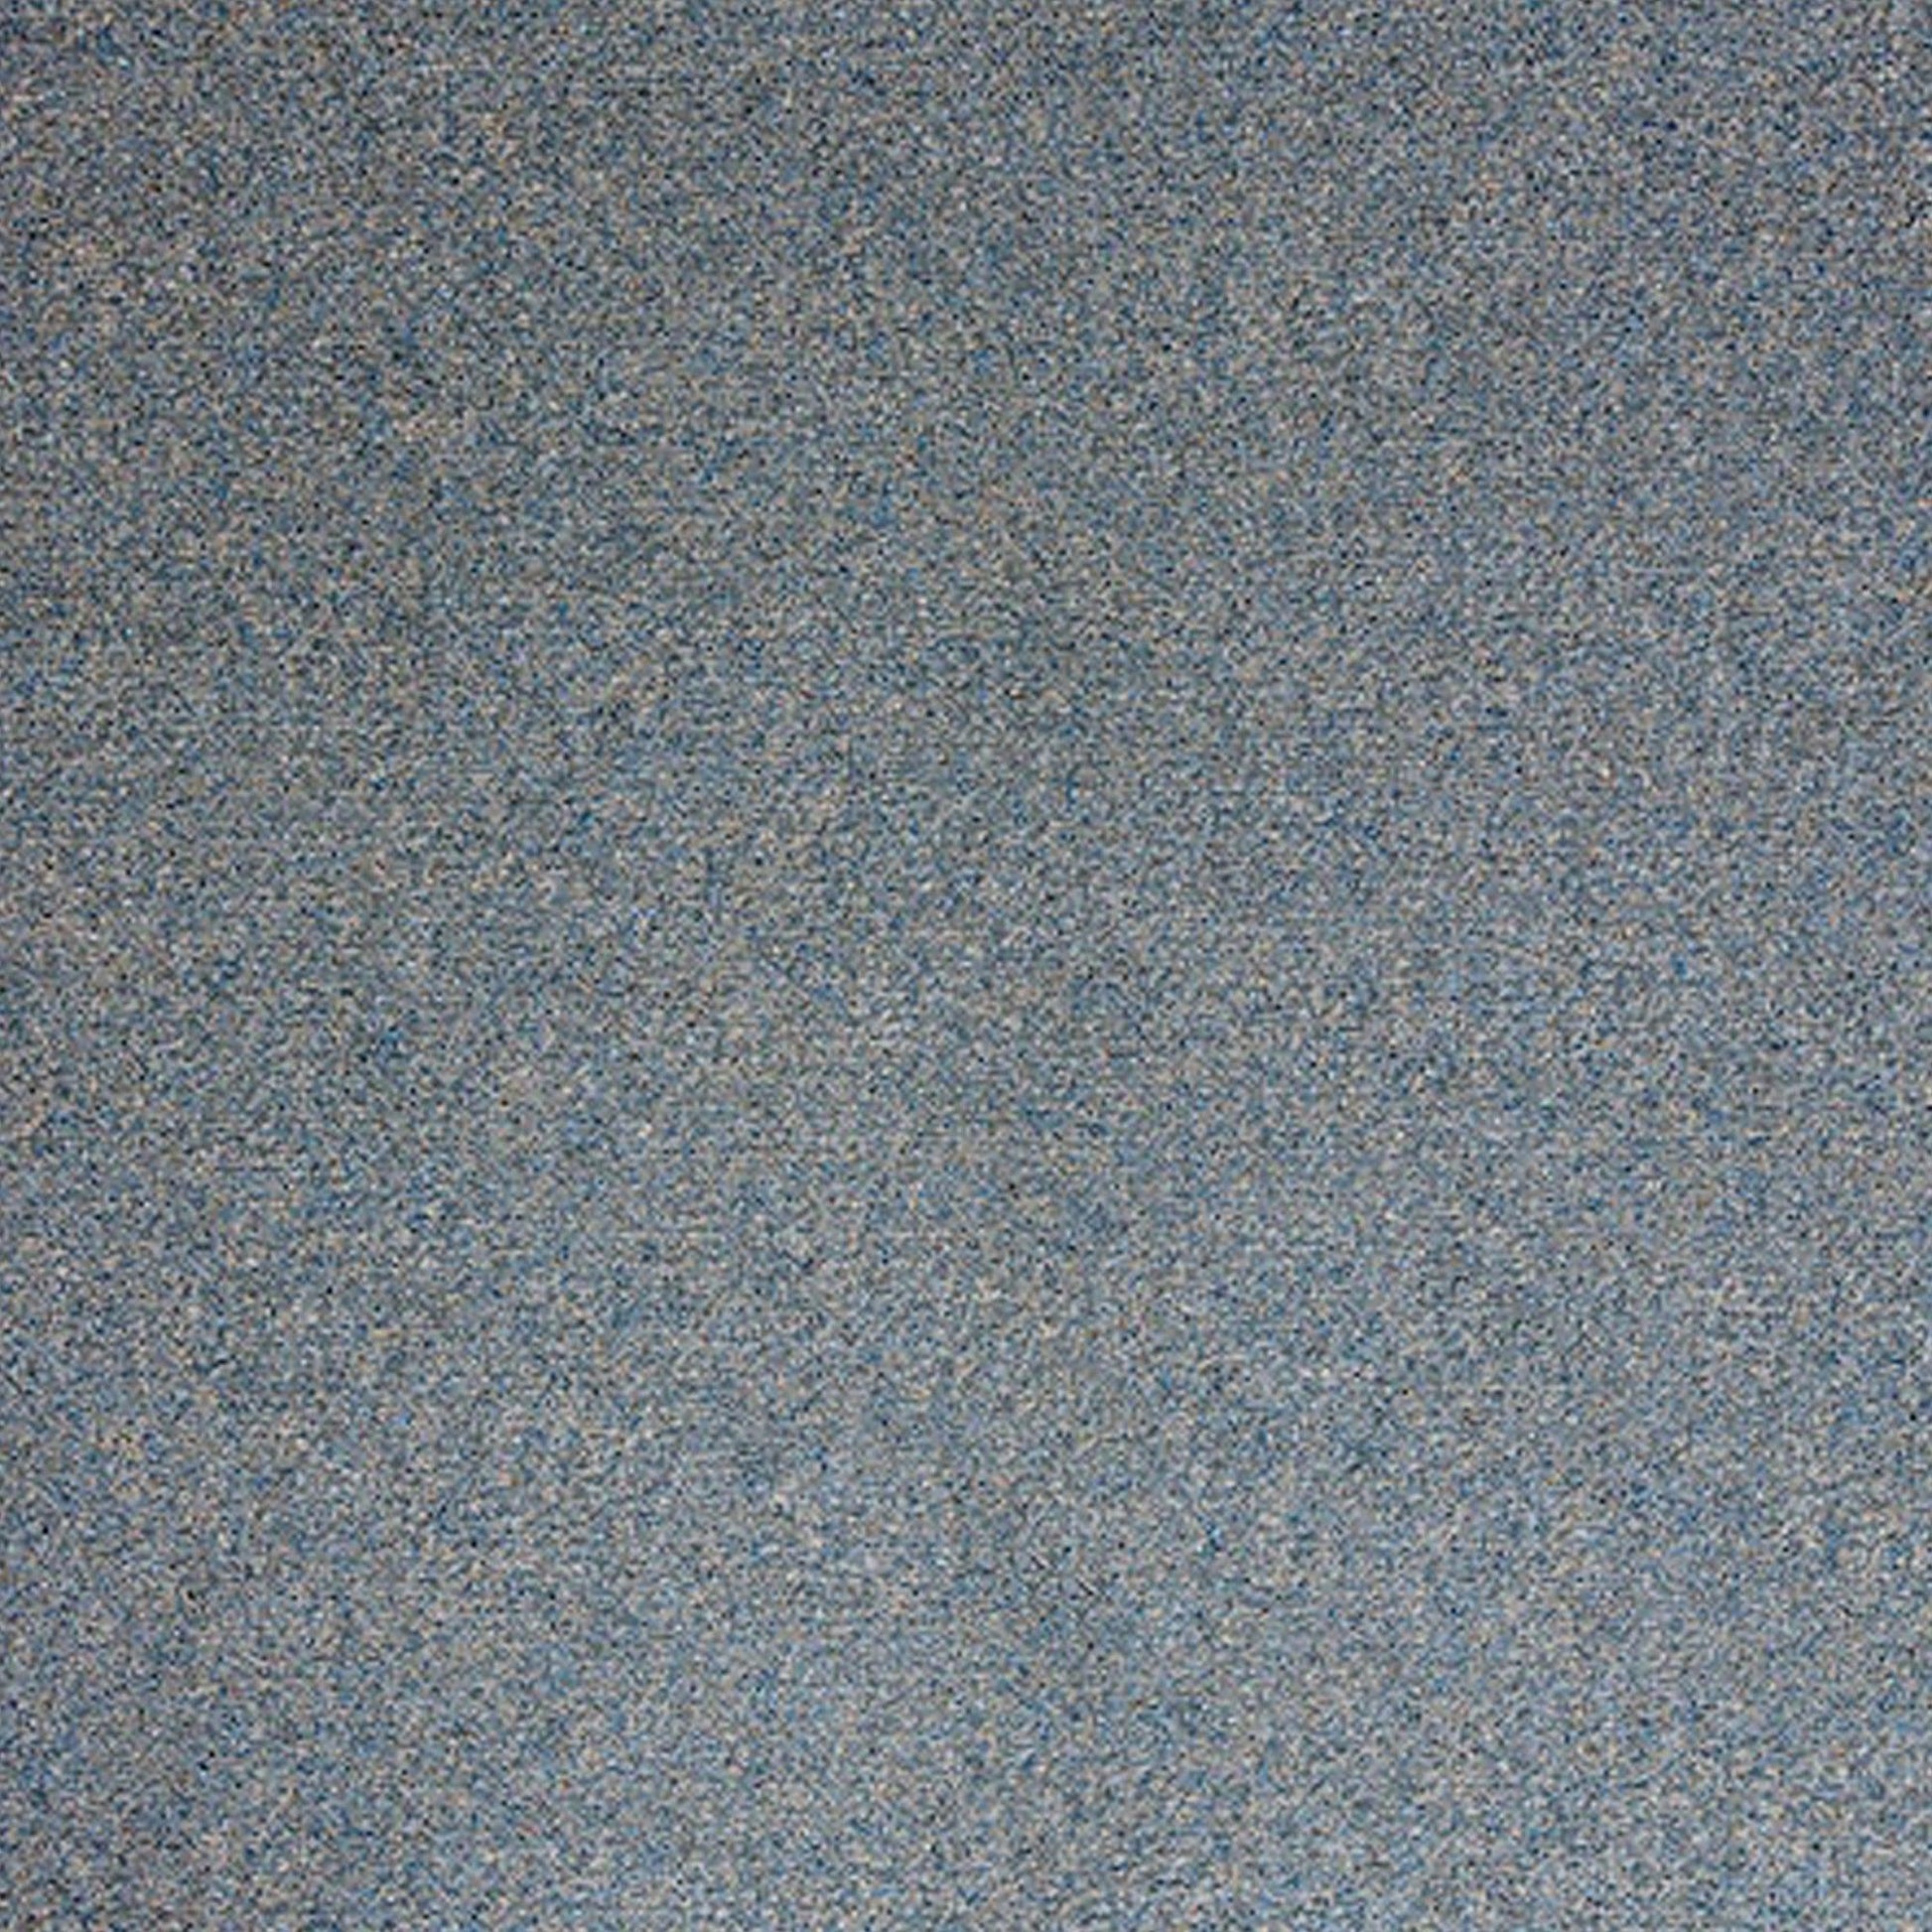 Satisfaction Polypropylene Carpet Collection Polypropylene Carpet by KLD Home